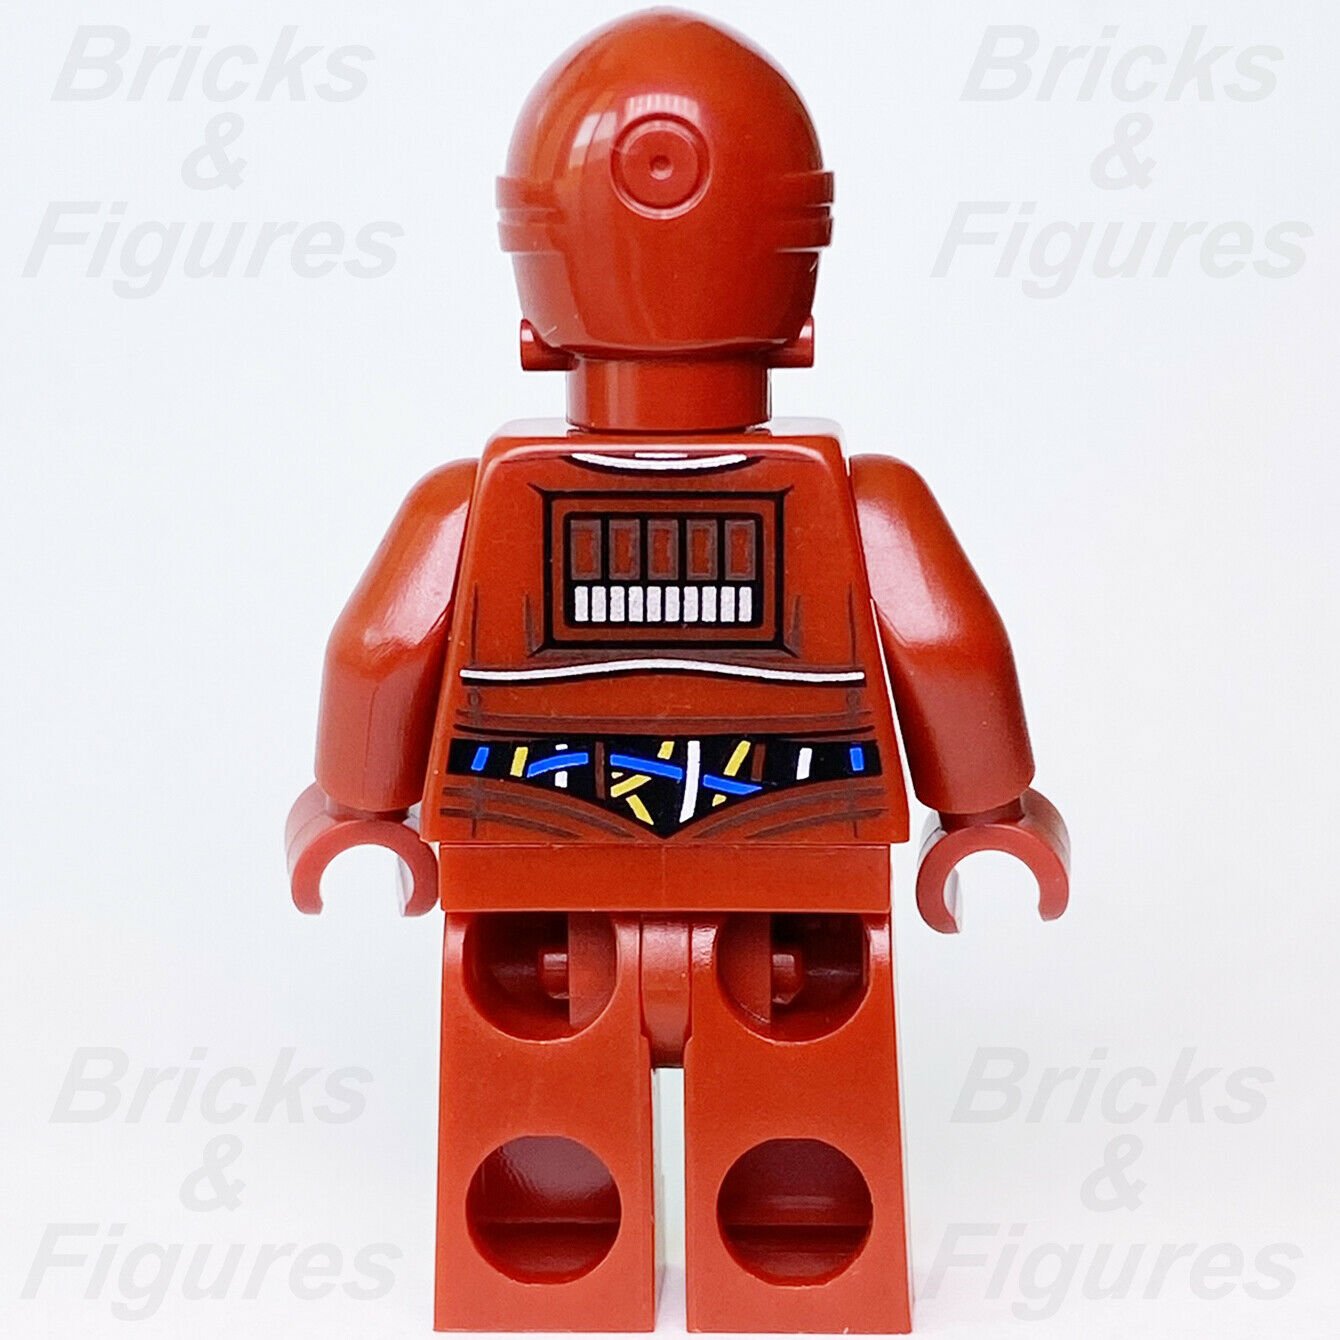 Star Wars LEGO TC-4 Protocol Droid Red The Phantom Menace Minifigure 5002122